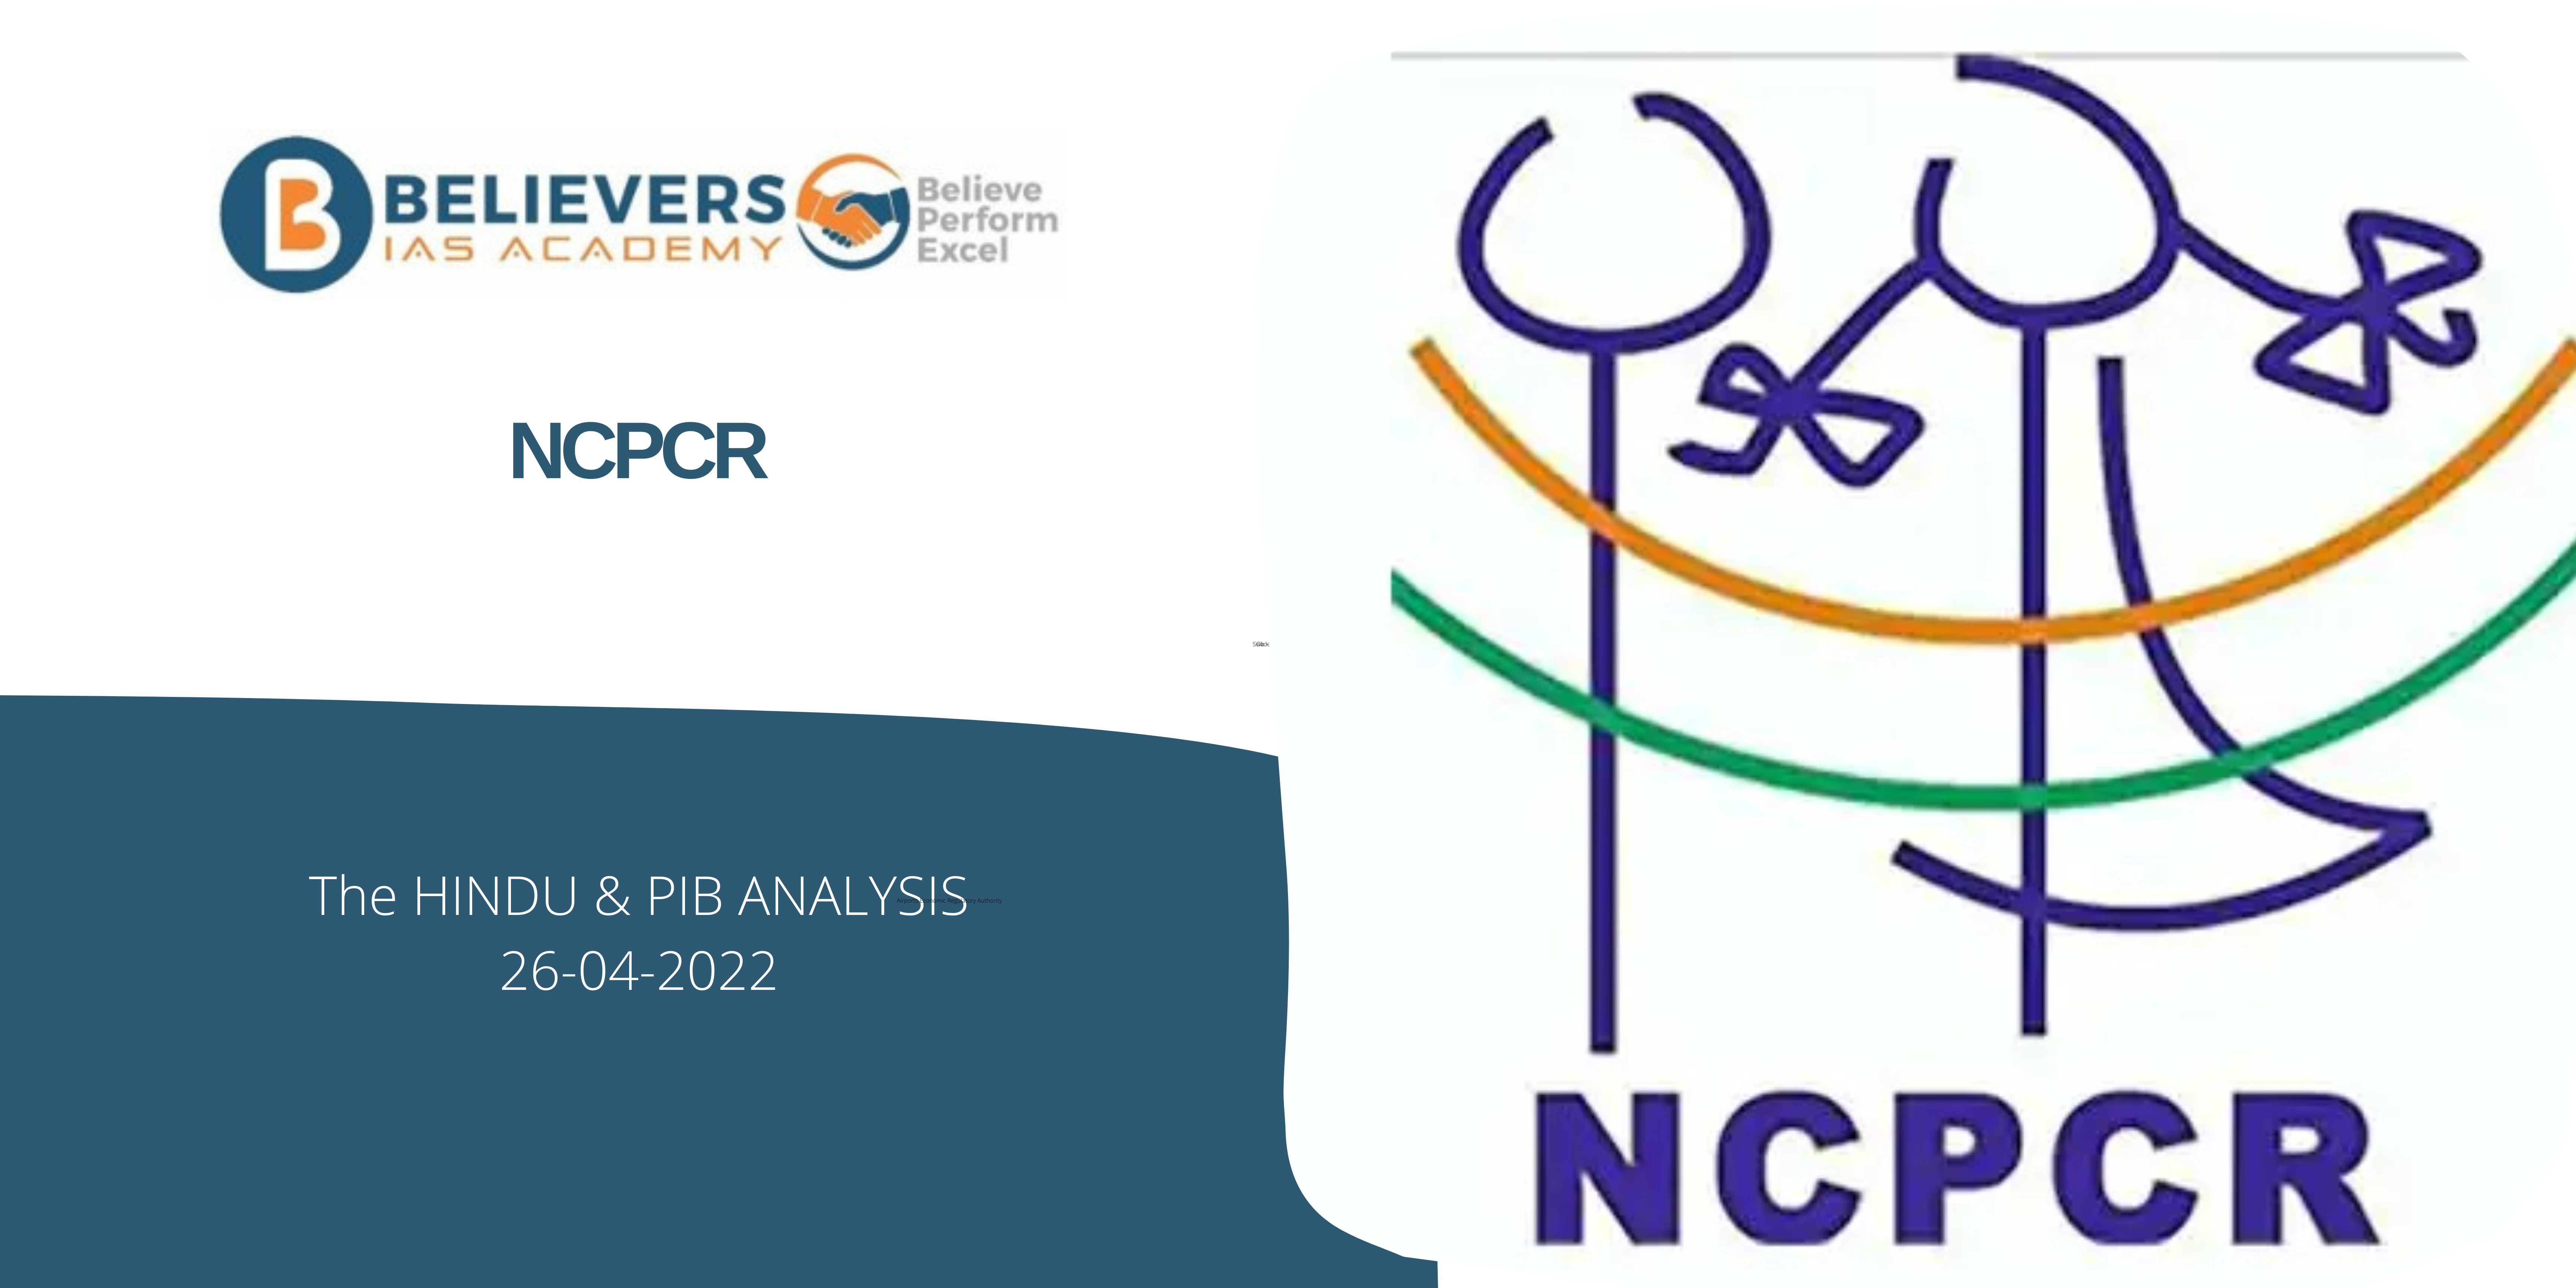 UPSC Current affairs - NCPCR